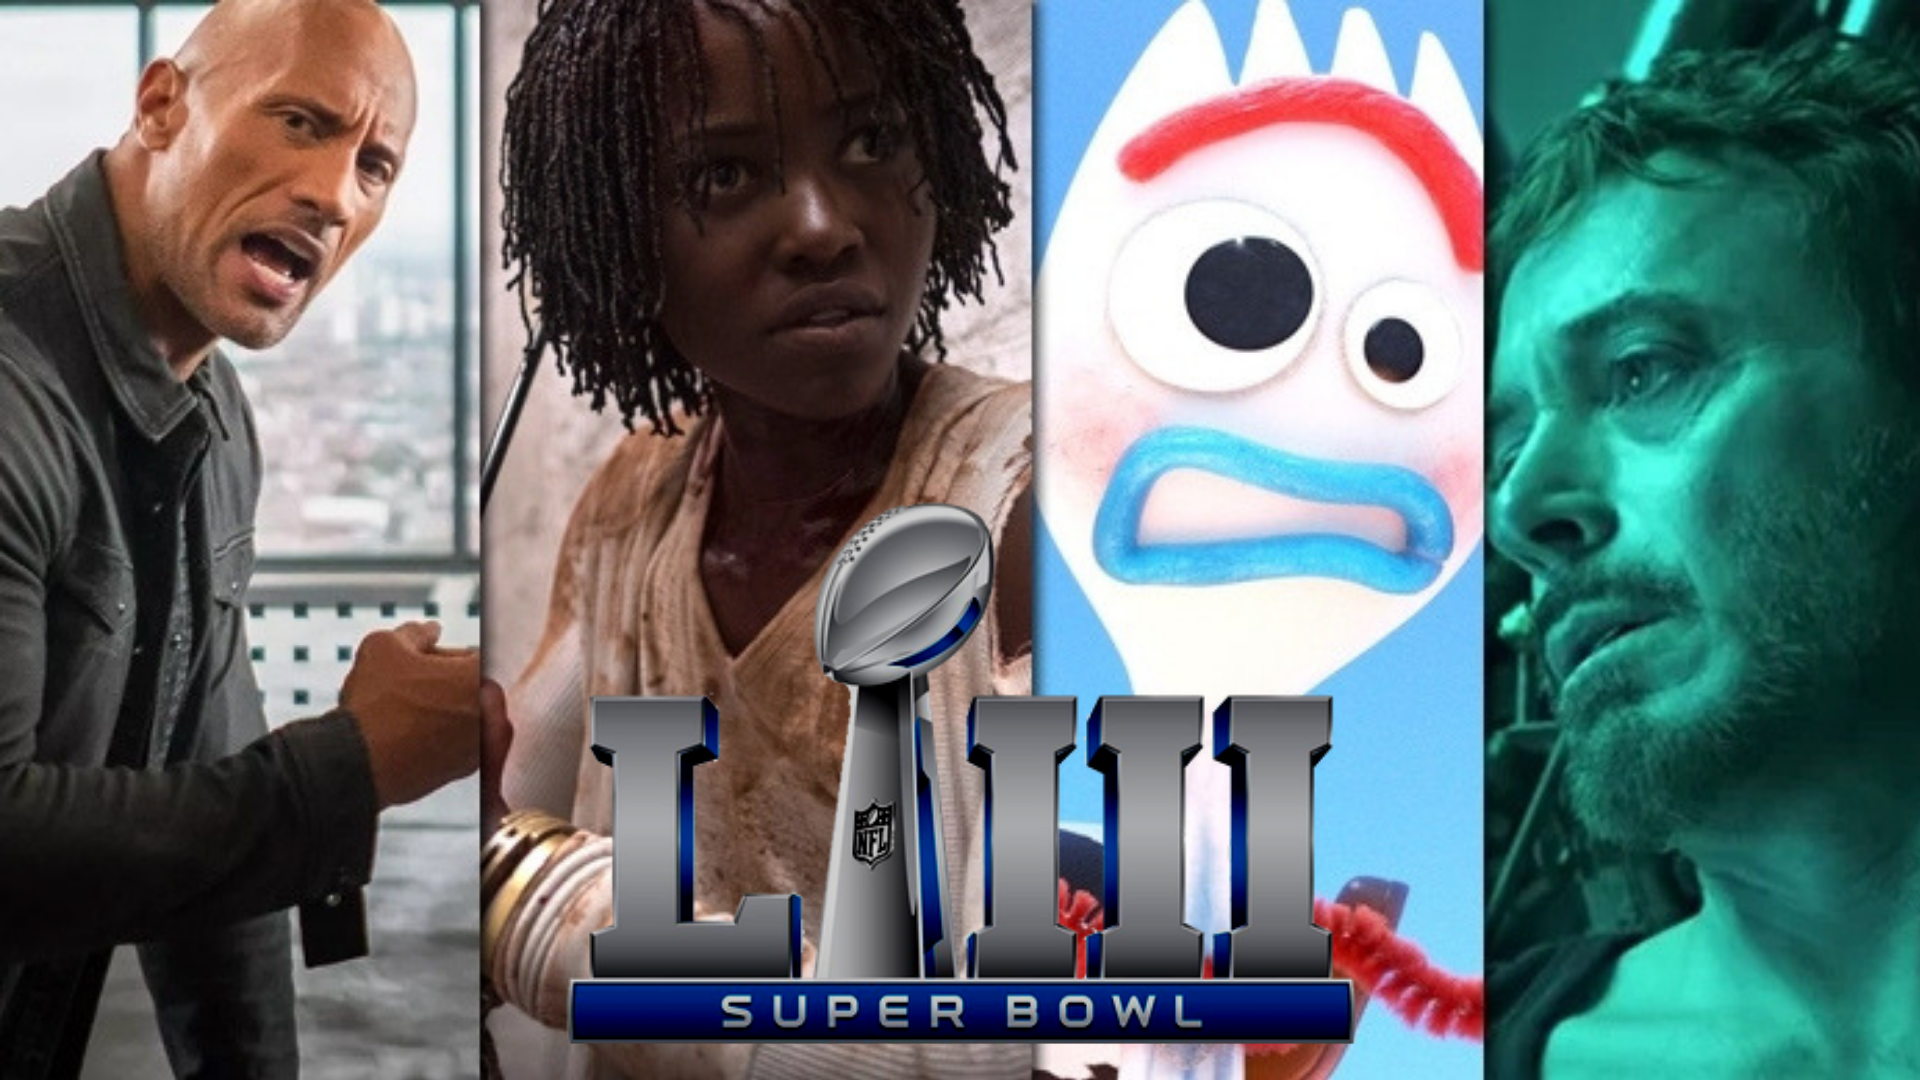 Super Bowl trailer mostrati